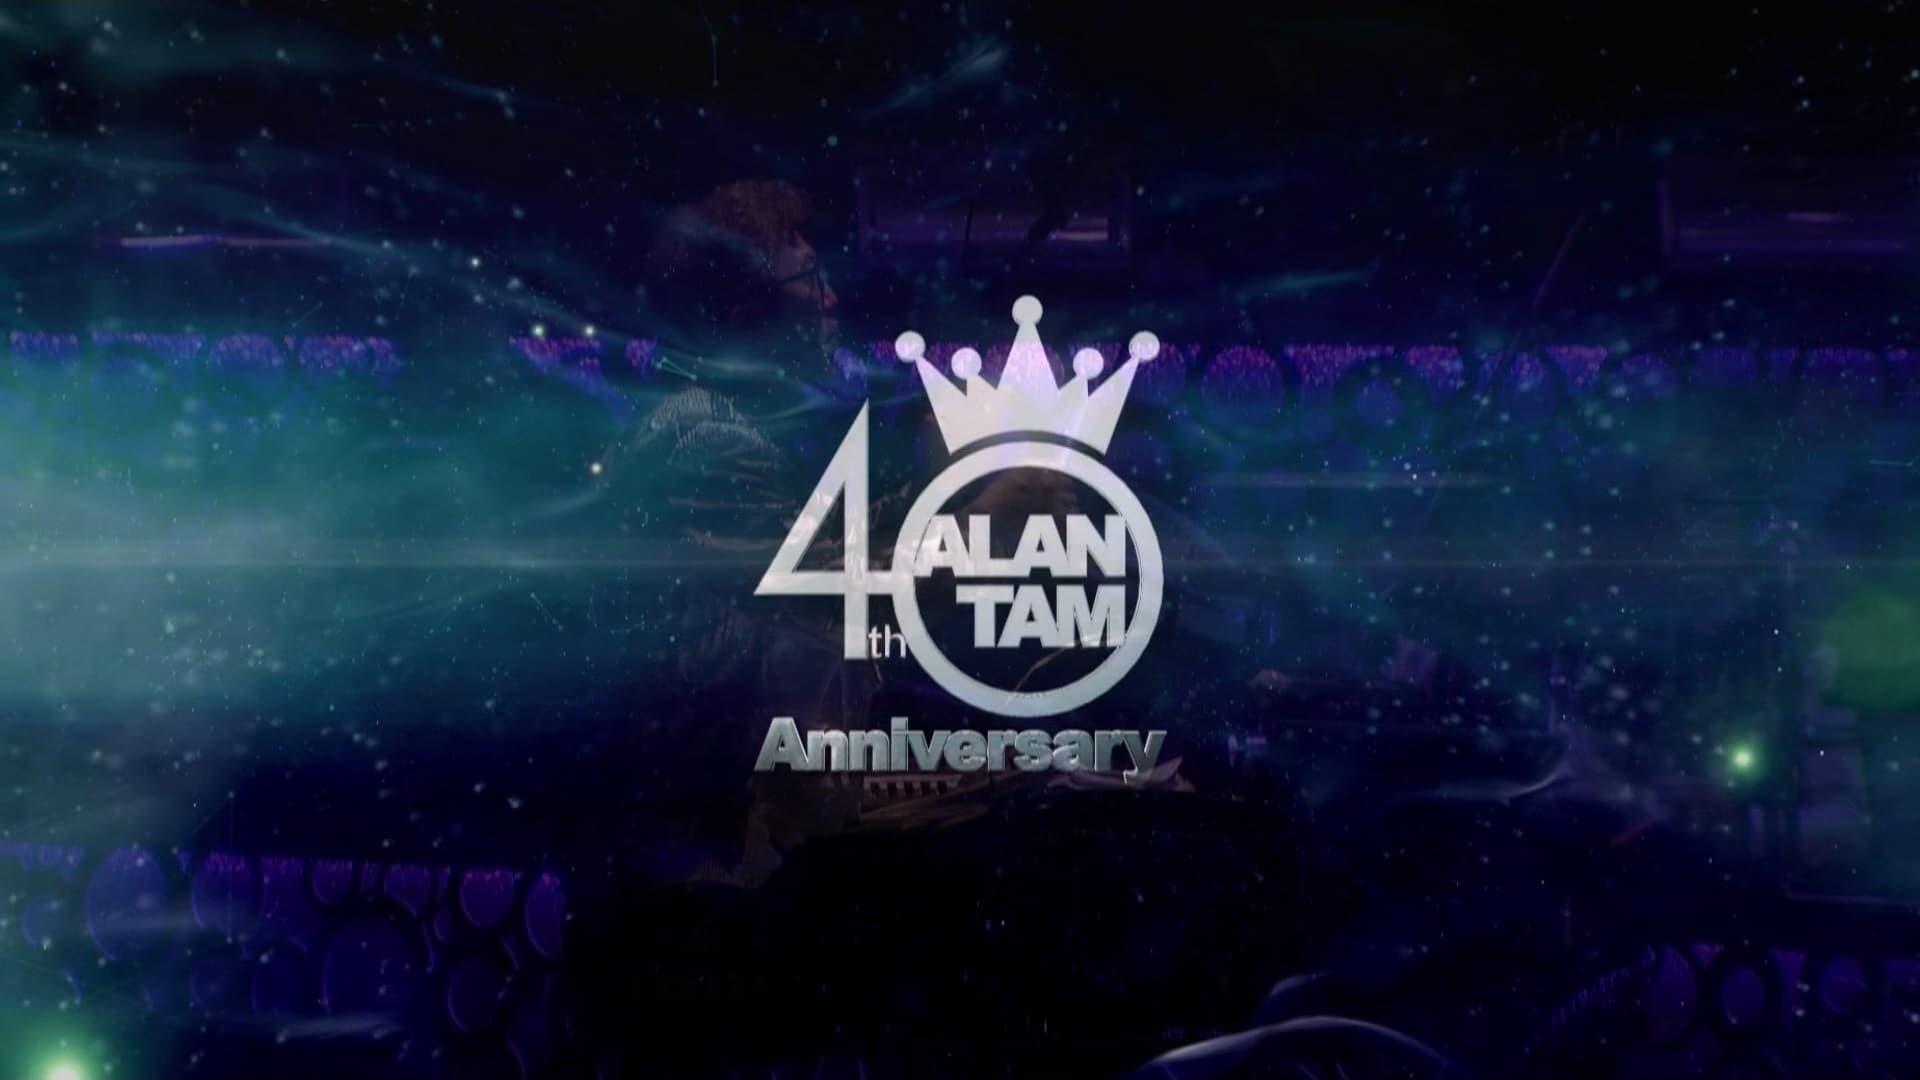 Alan Tam 40th Anniversary Live backdrop